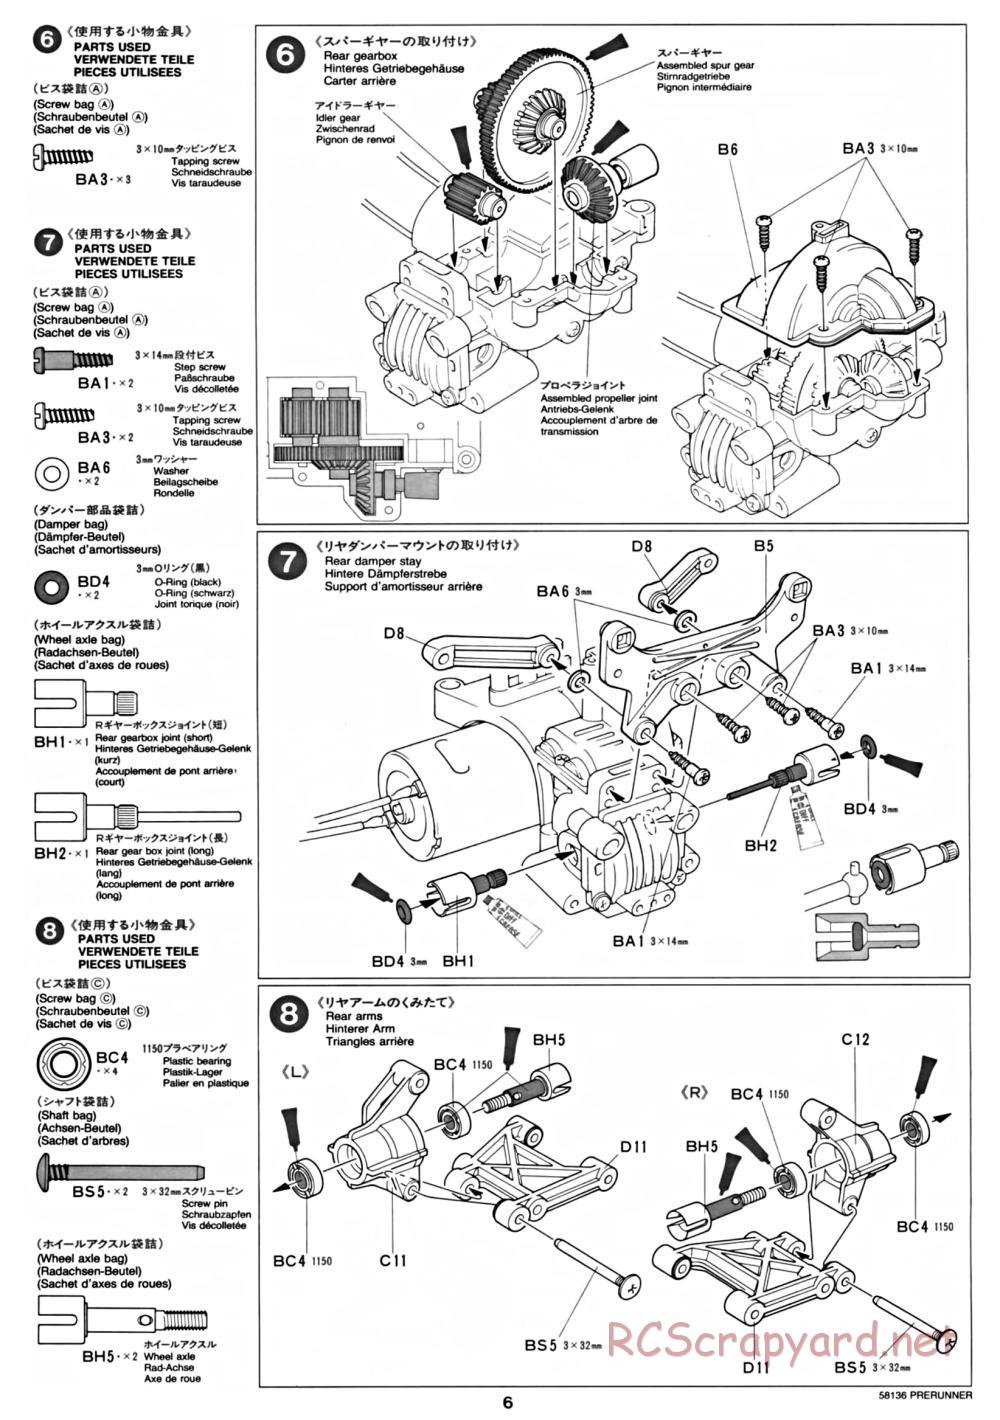 Tamiya - Toyota Prerunner Chassis - Manual - Page 6